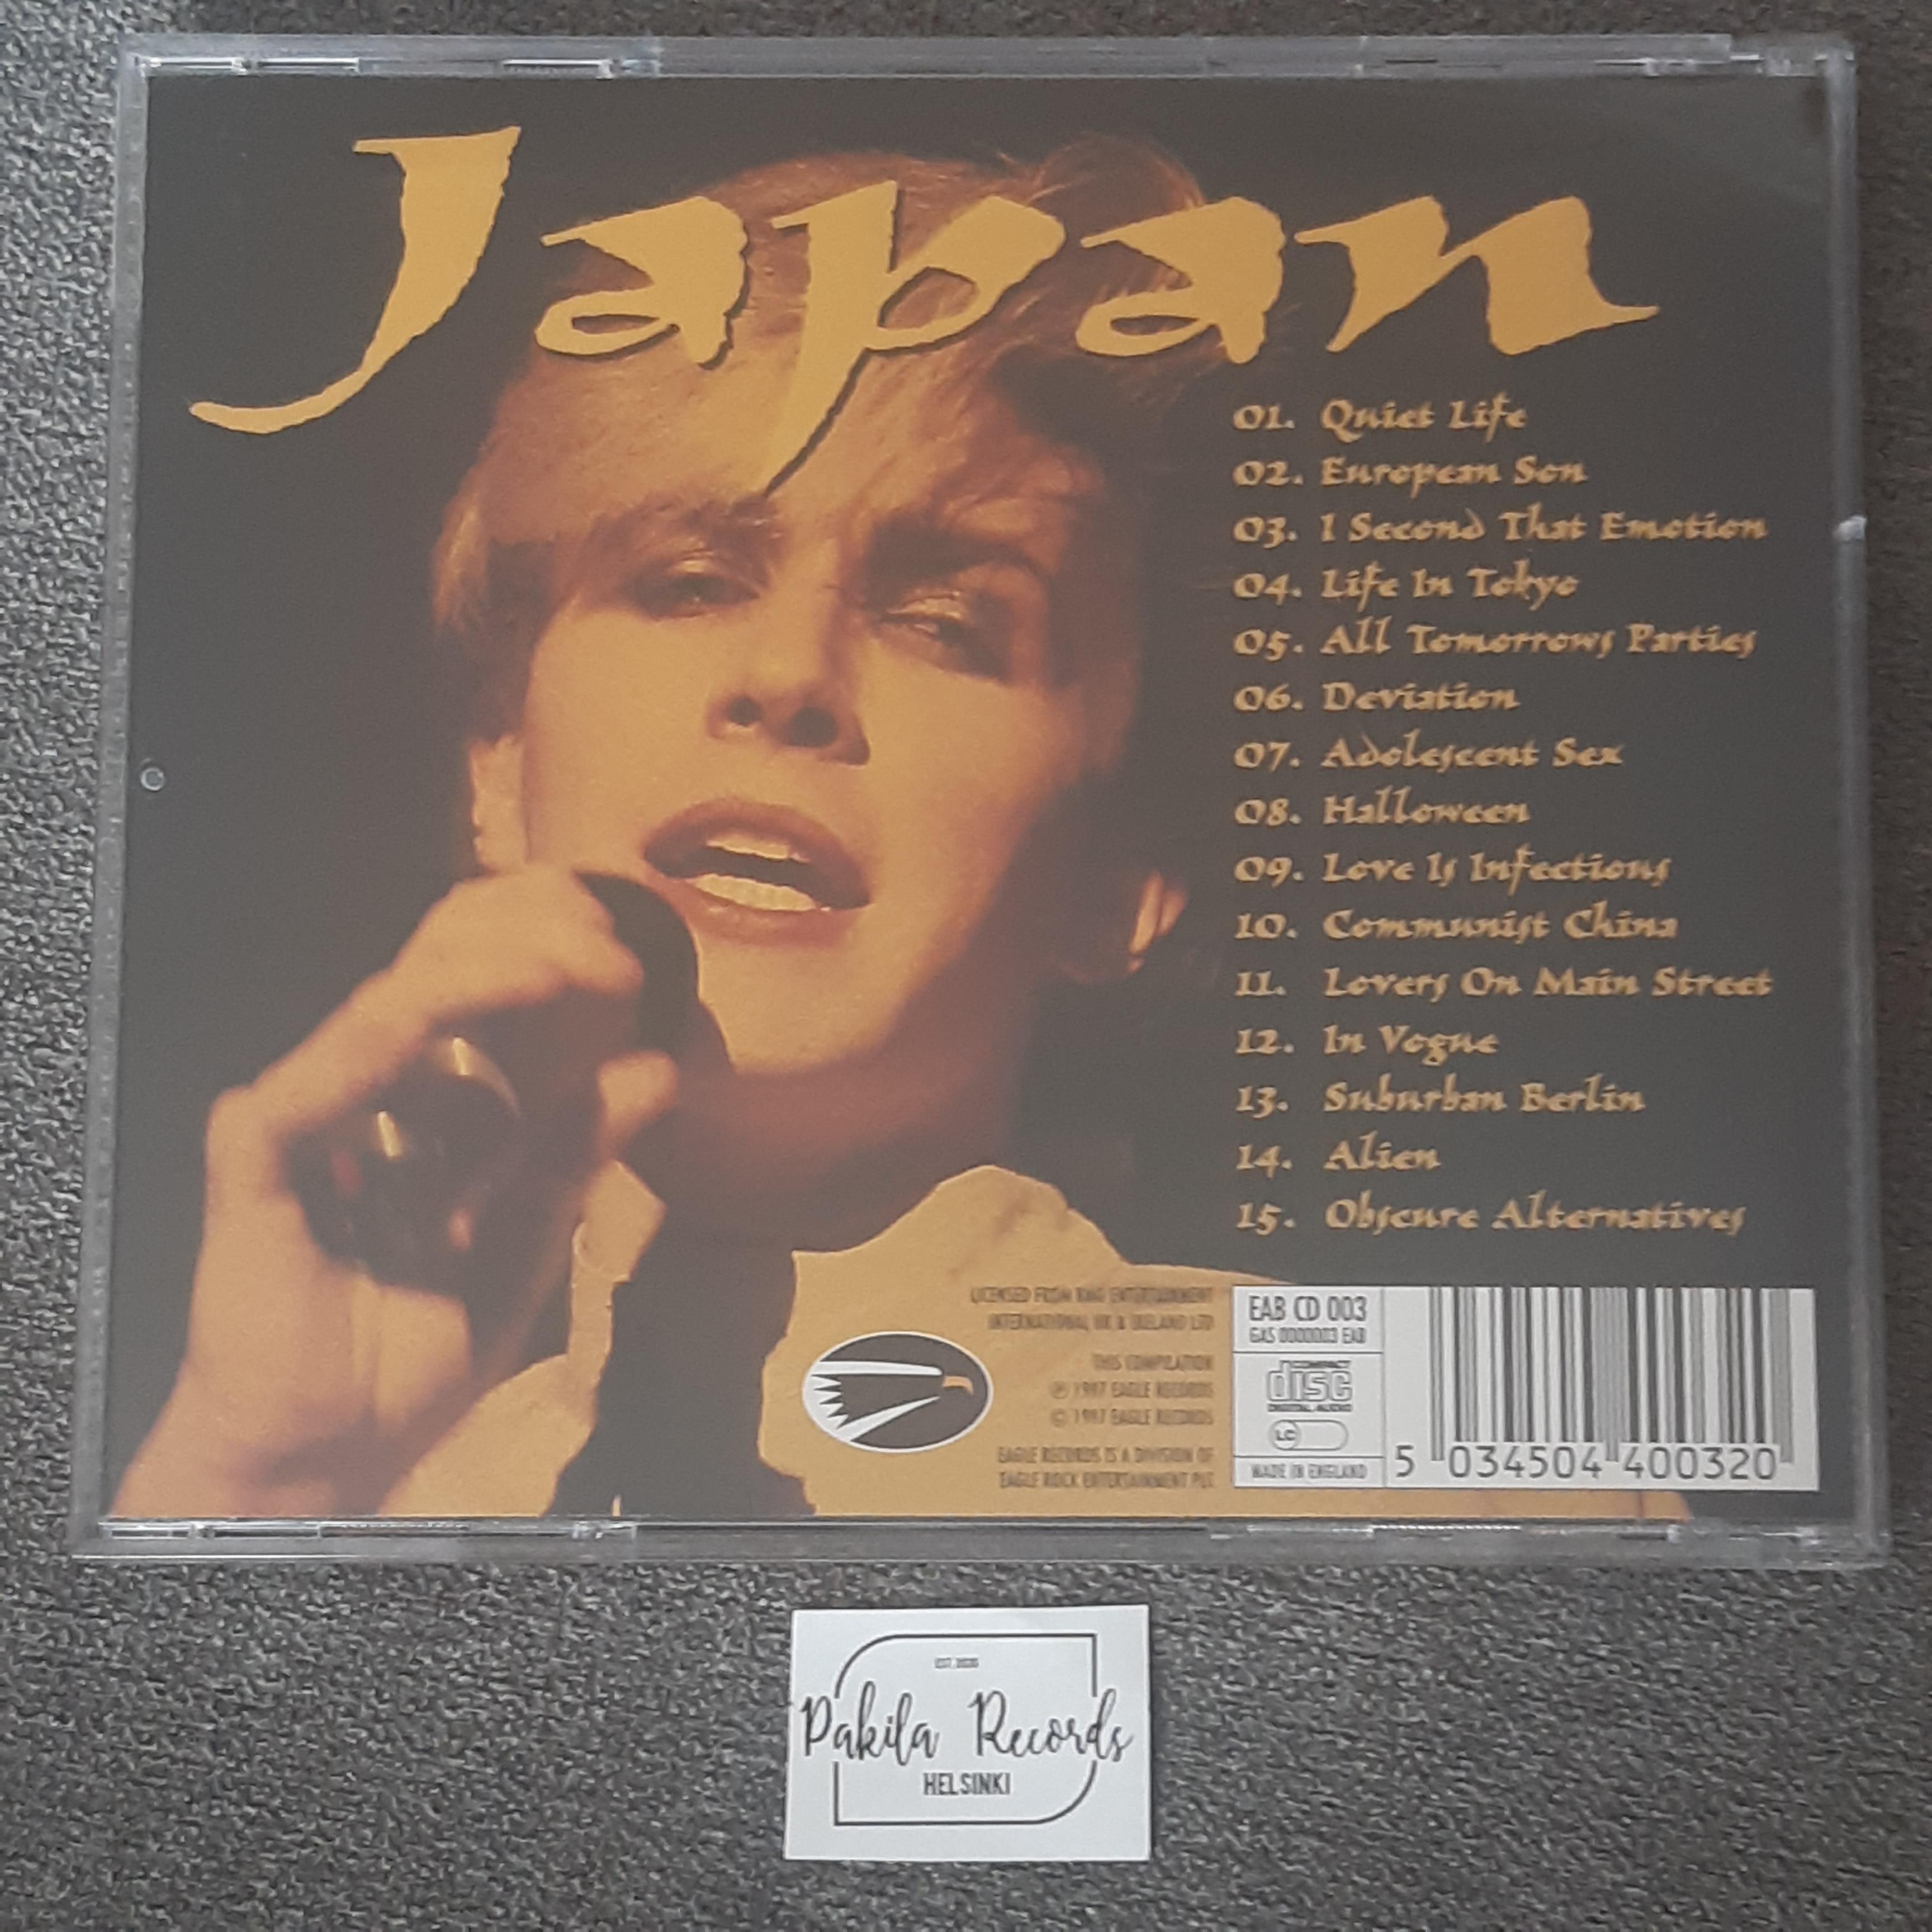 Japan - The Masters - CD (käytetty)